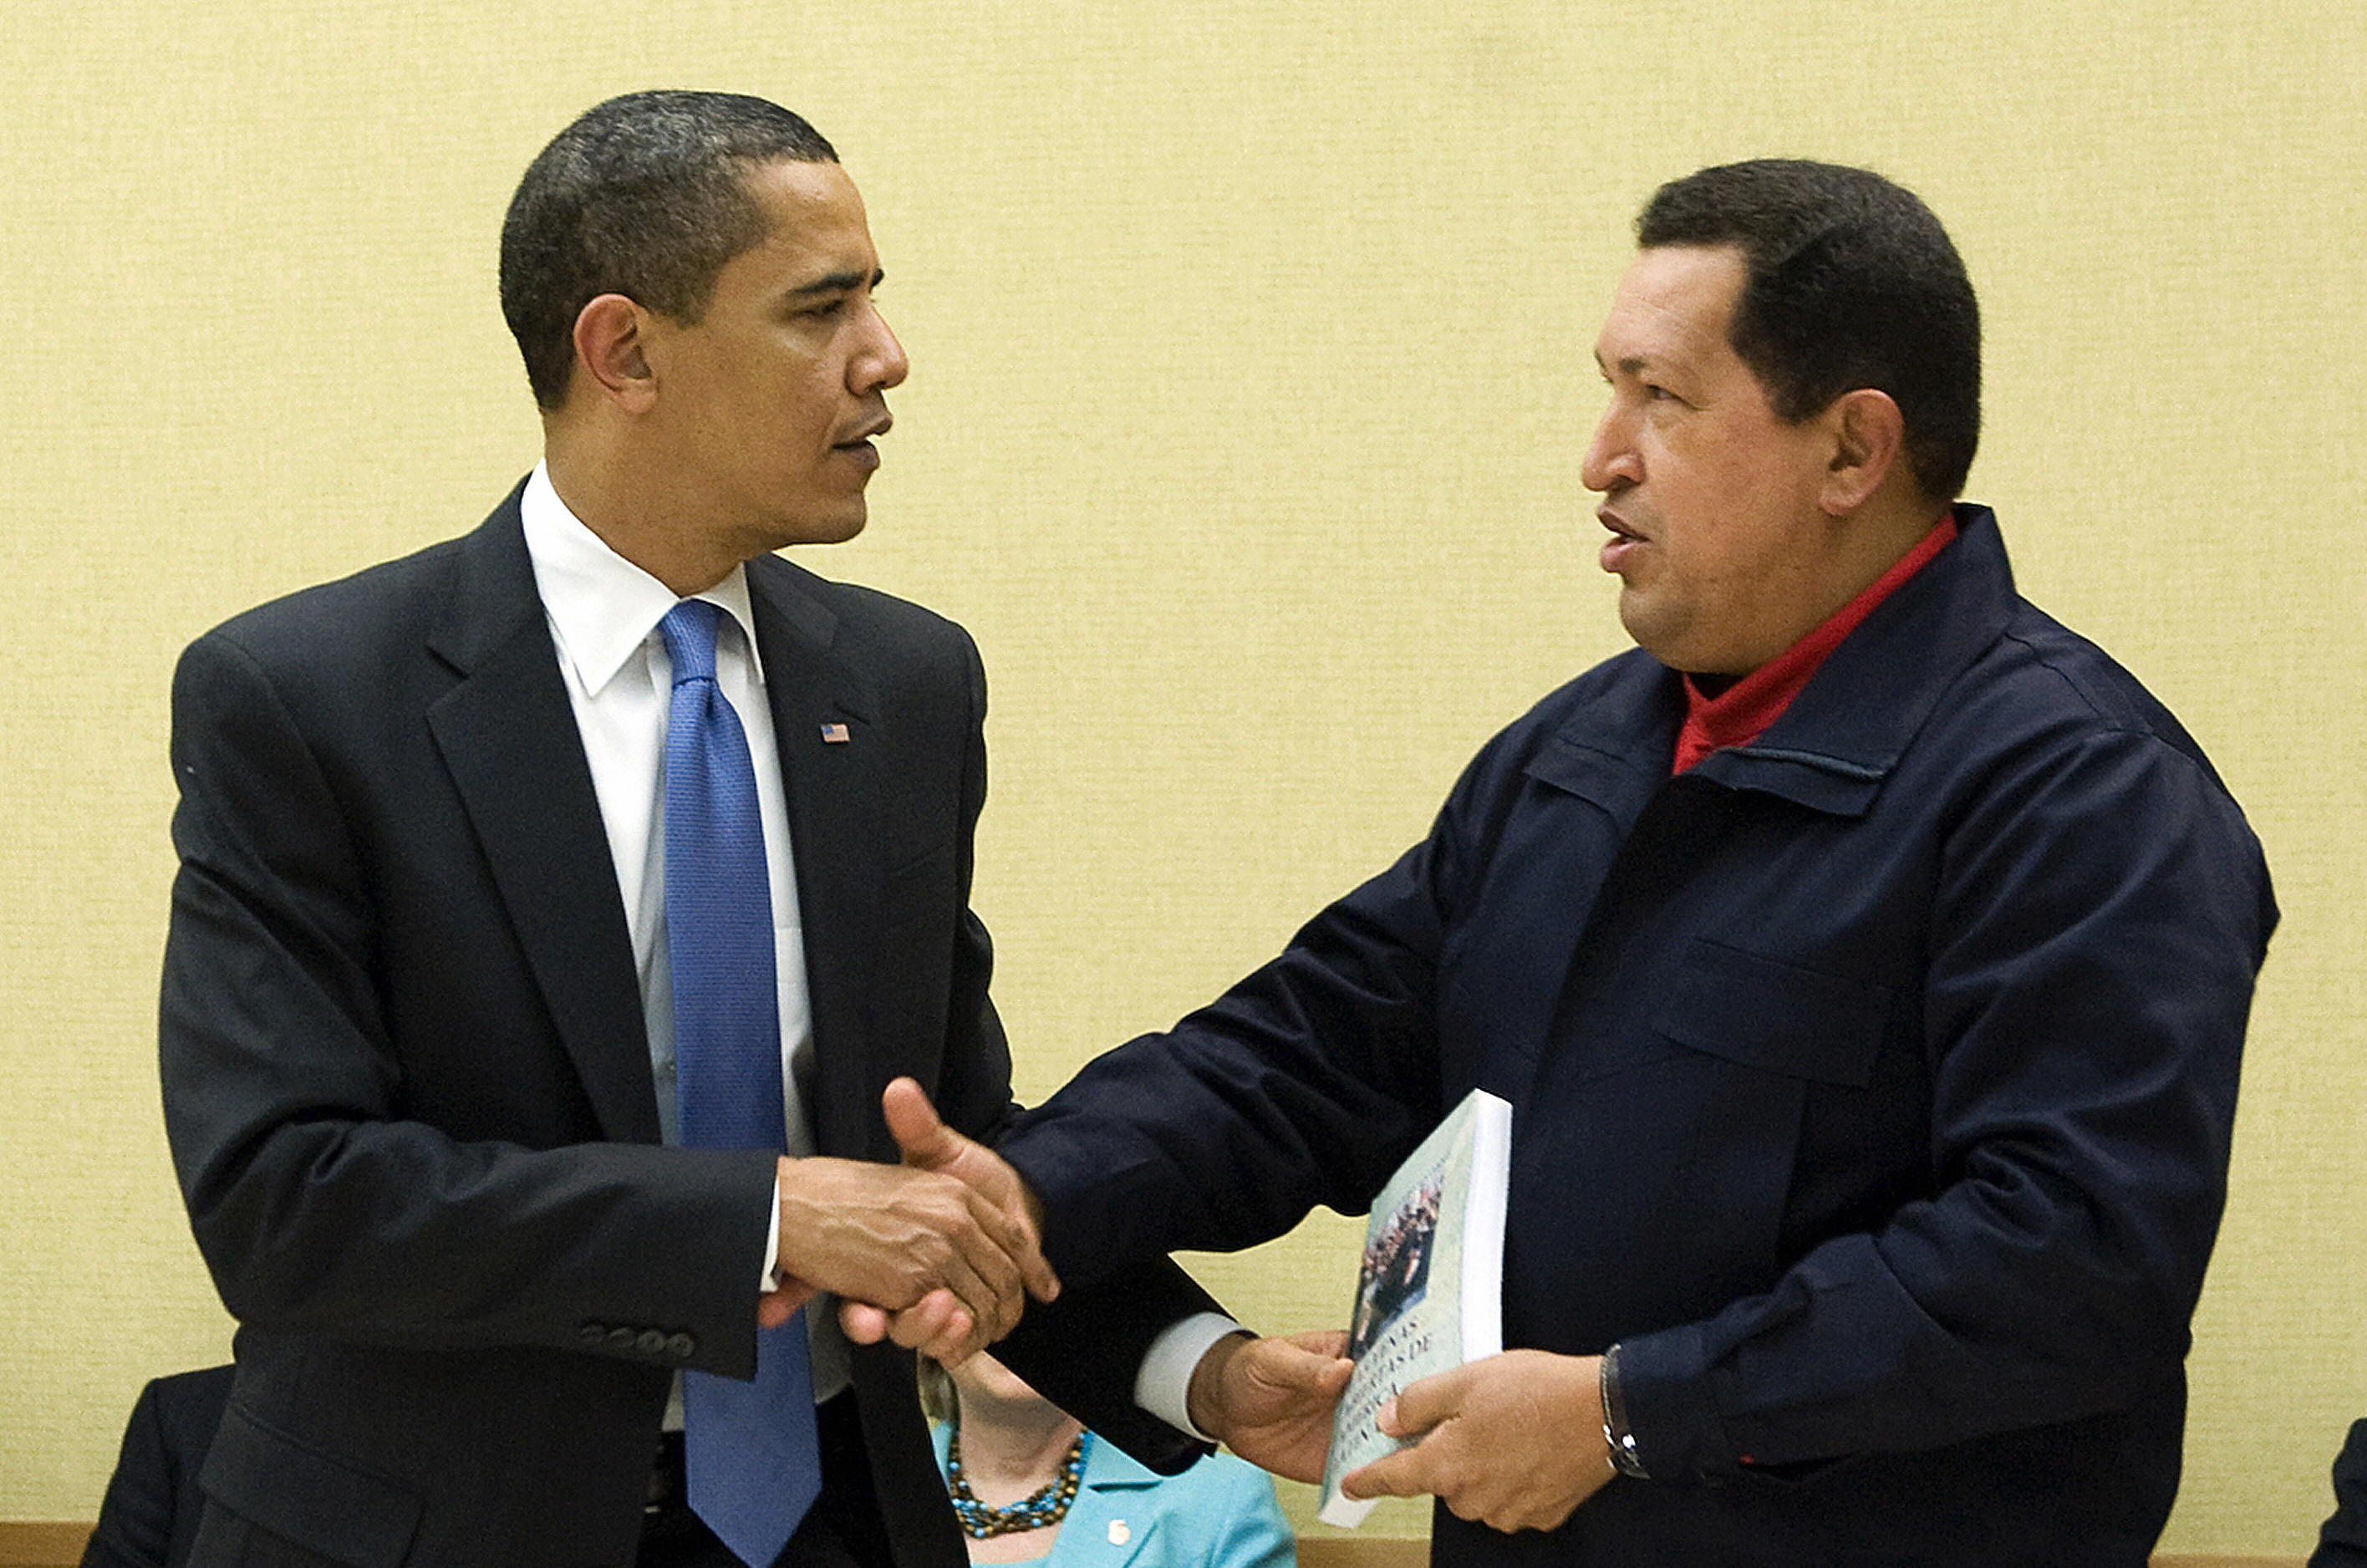 Obama and Chavez